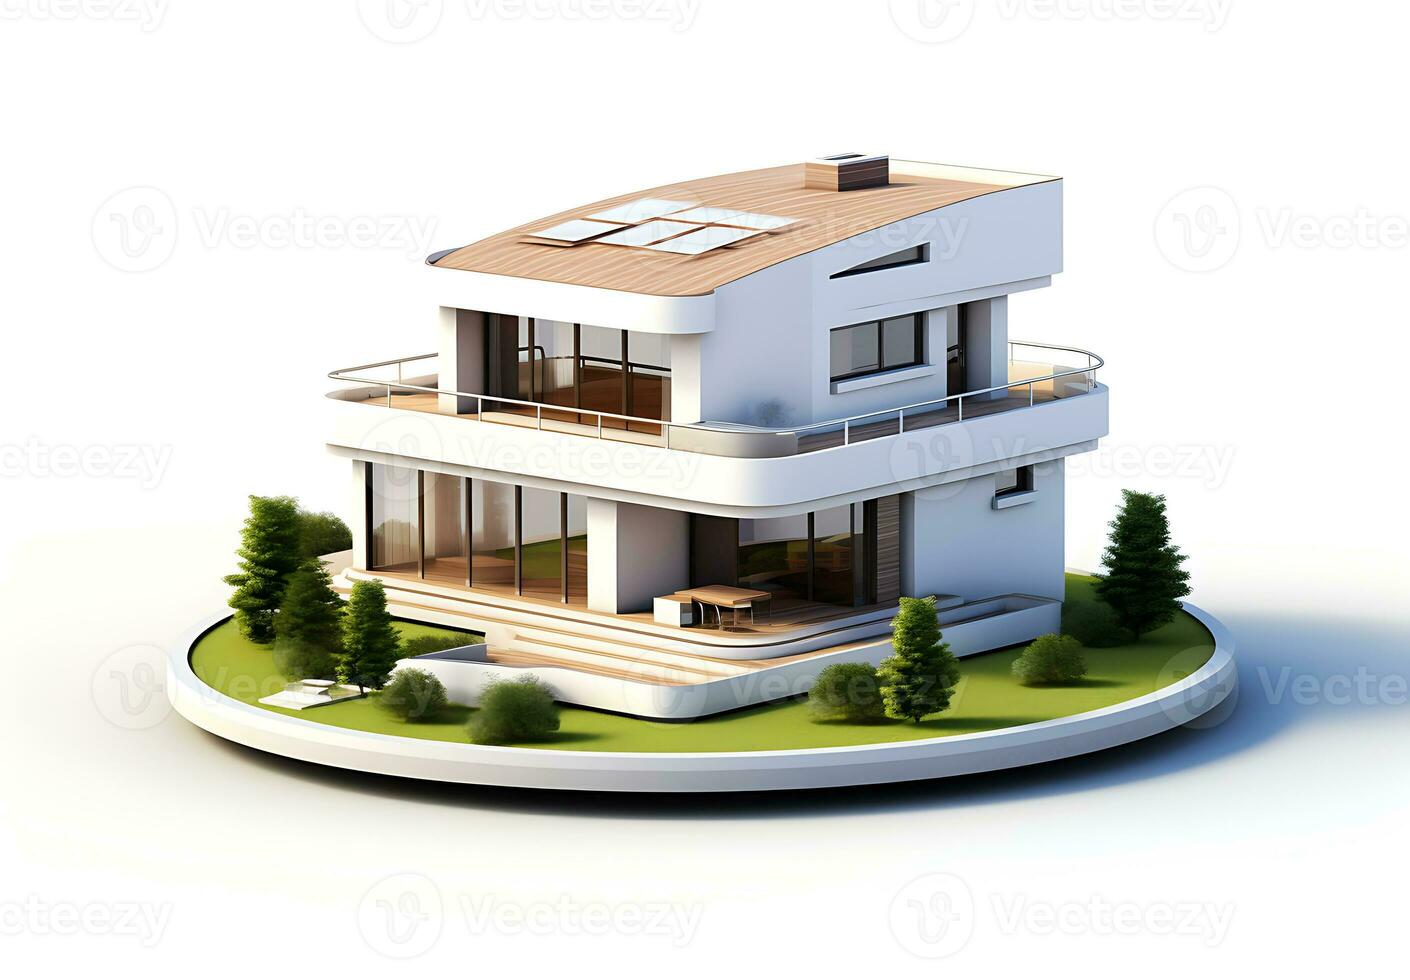 3d house model on white background photo